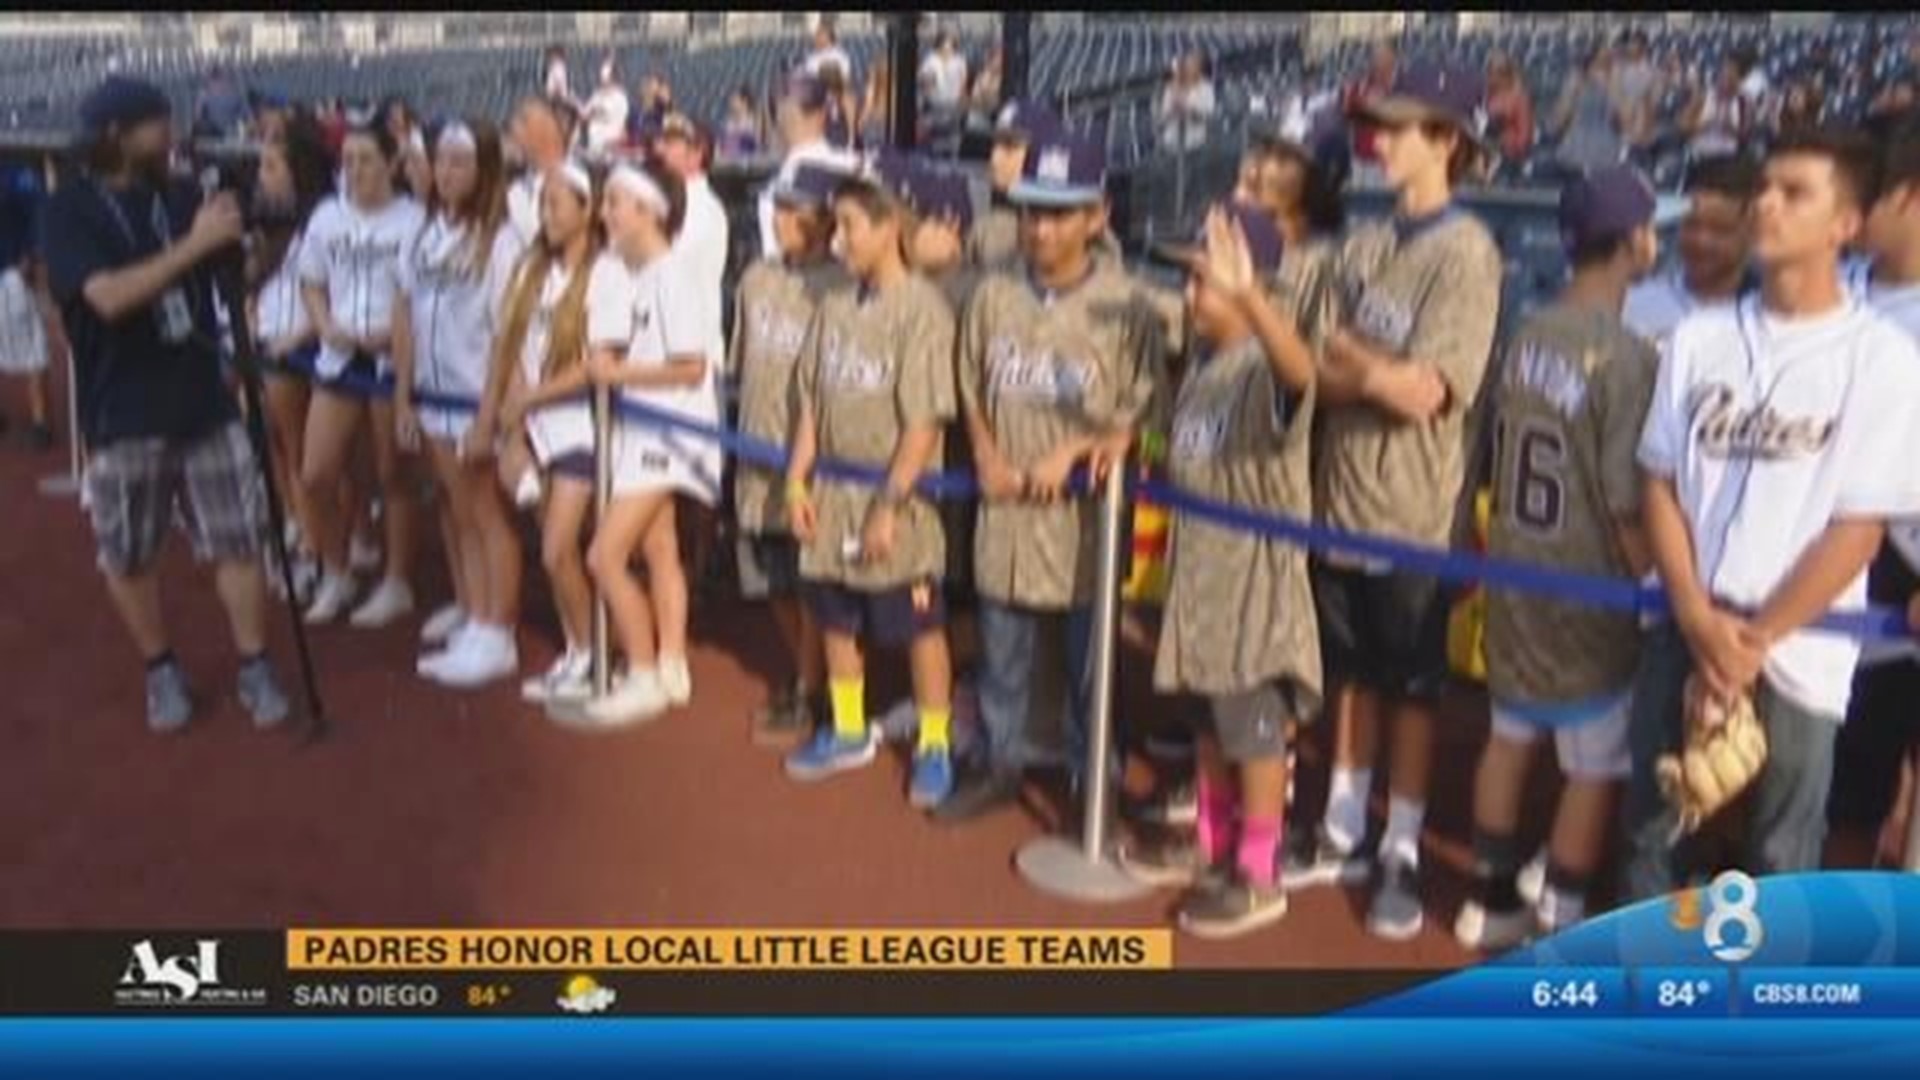 Padres honor local little league teams